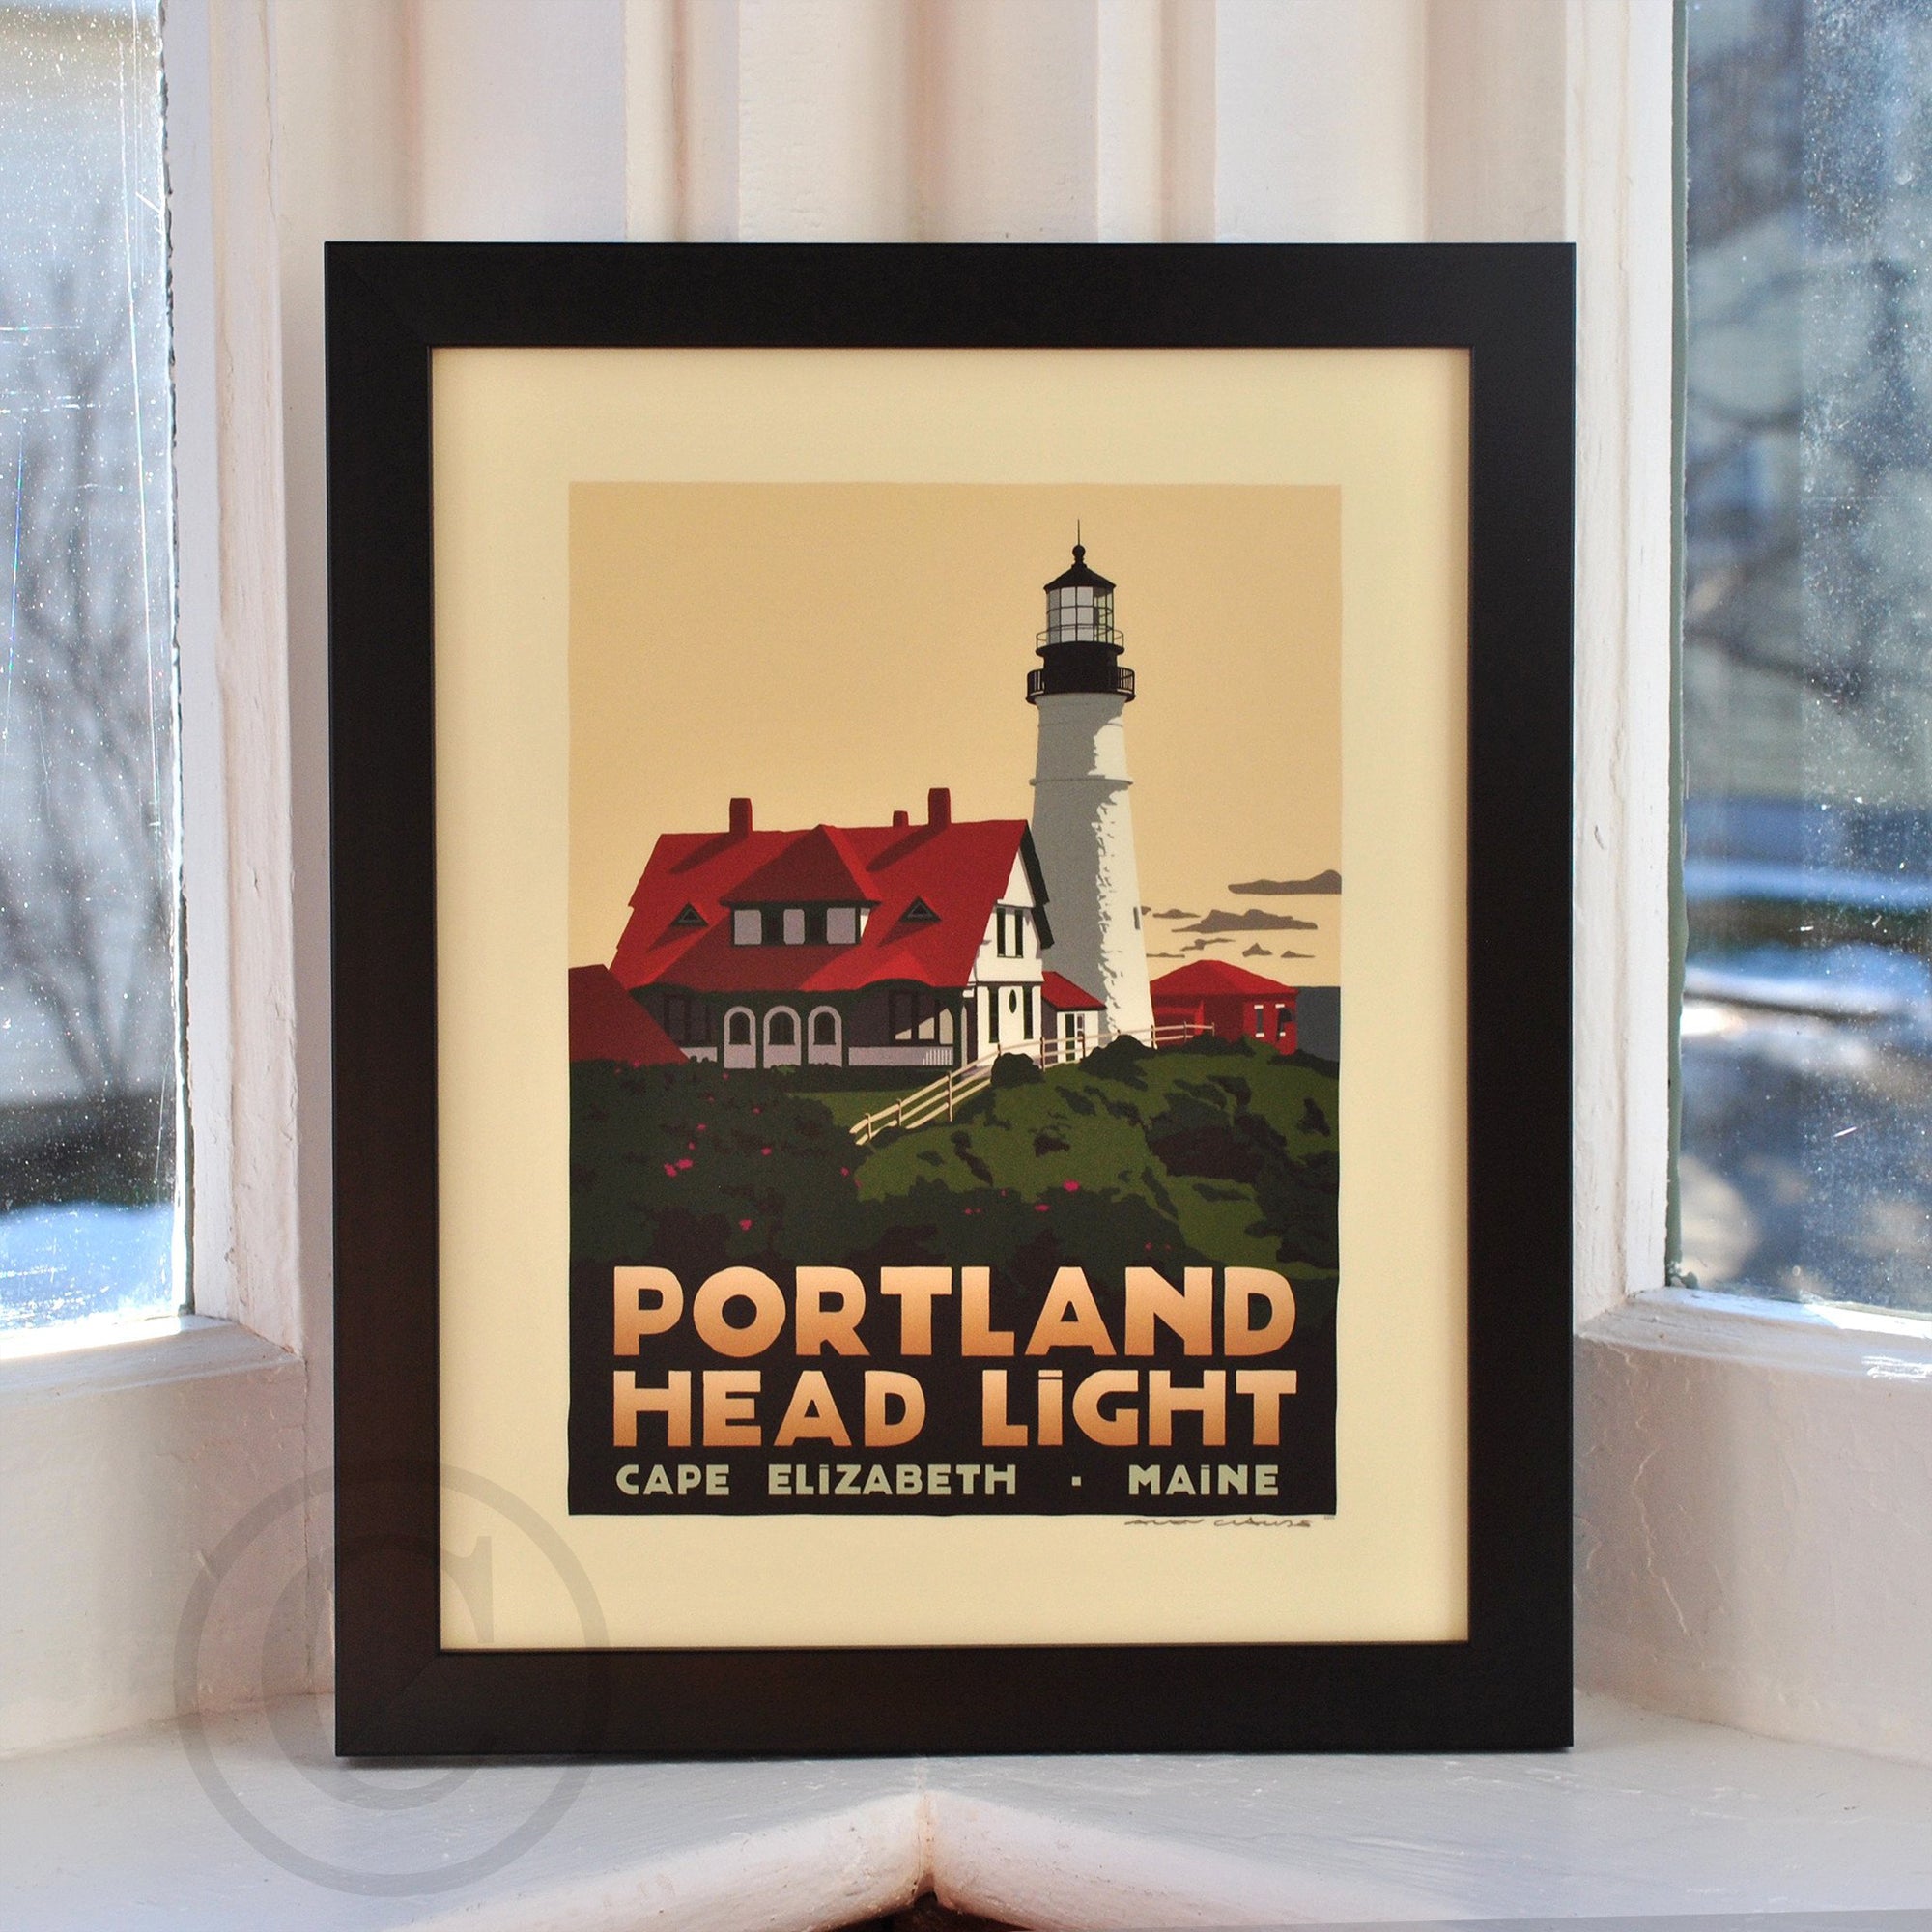 Portland Head Light Art Print 8" x 10" Framed Travel Poster By Alan Claude - Maine